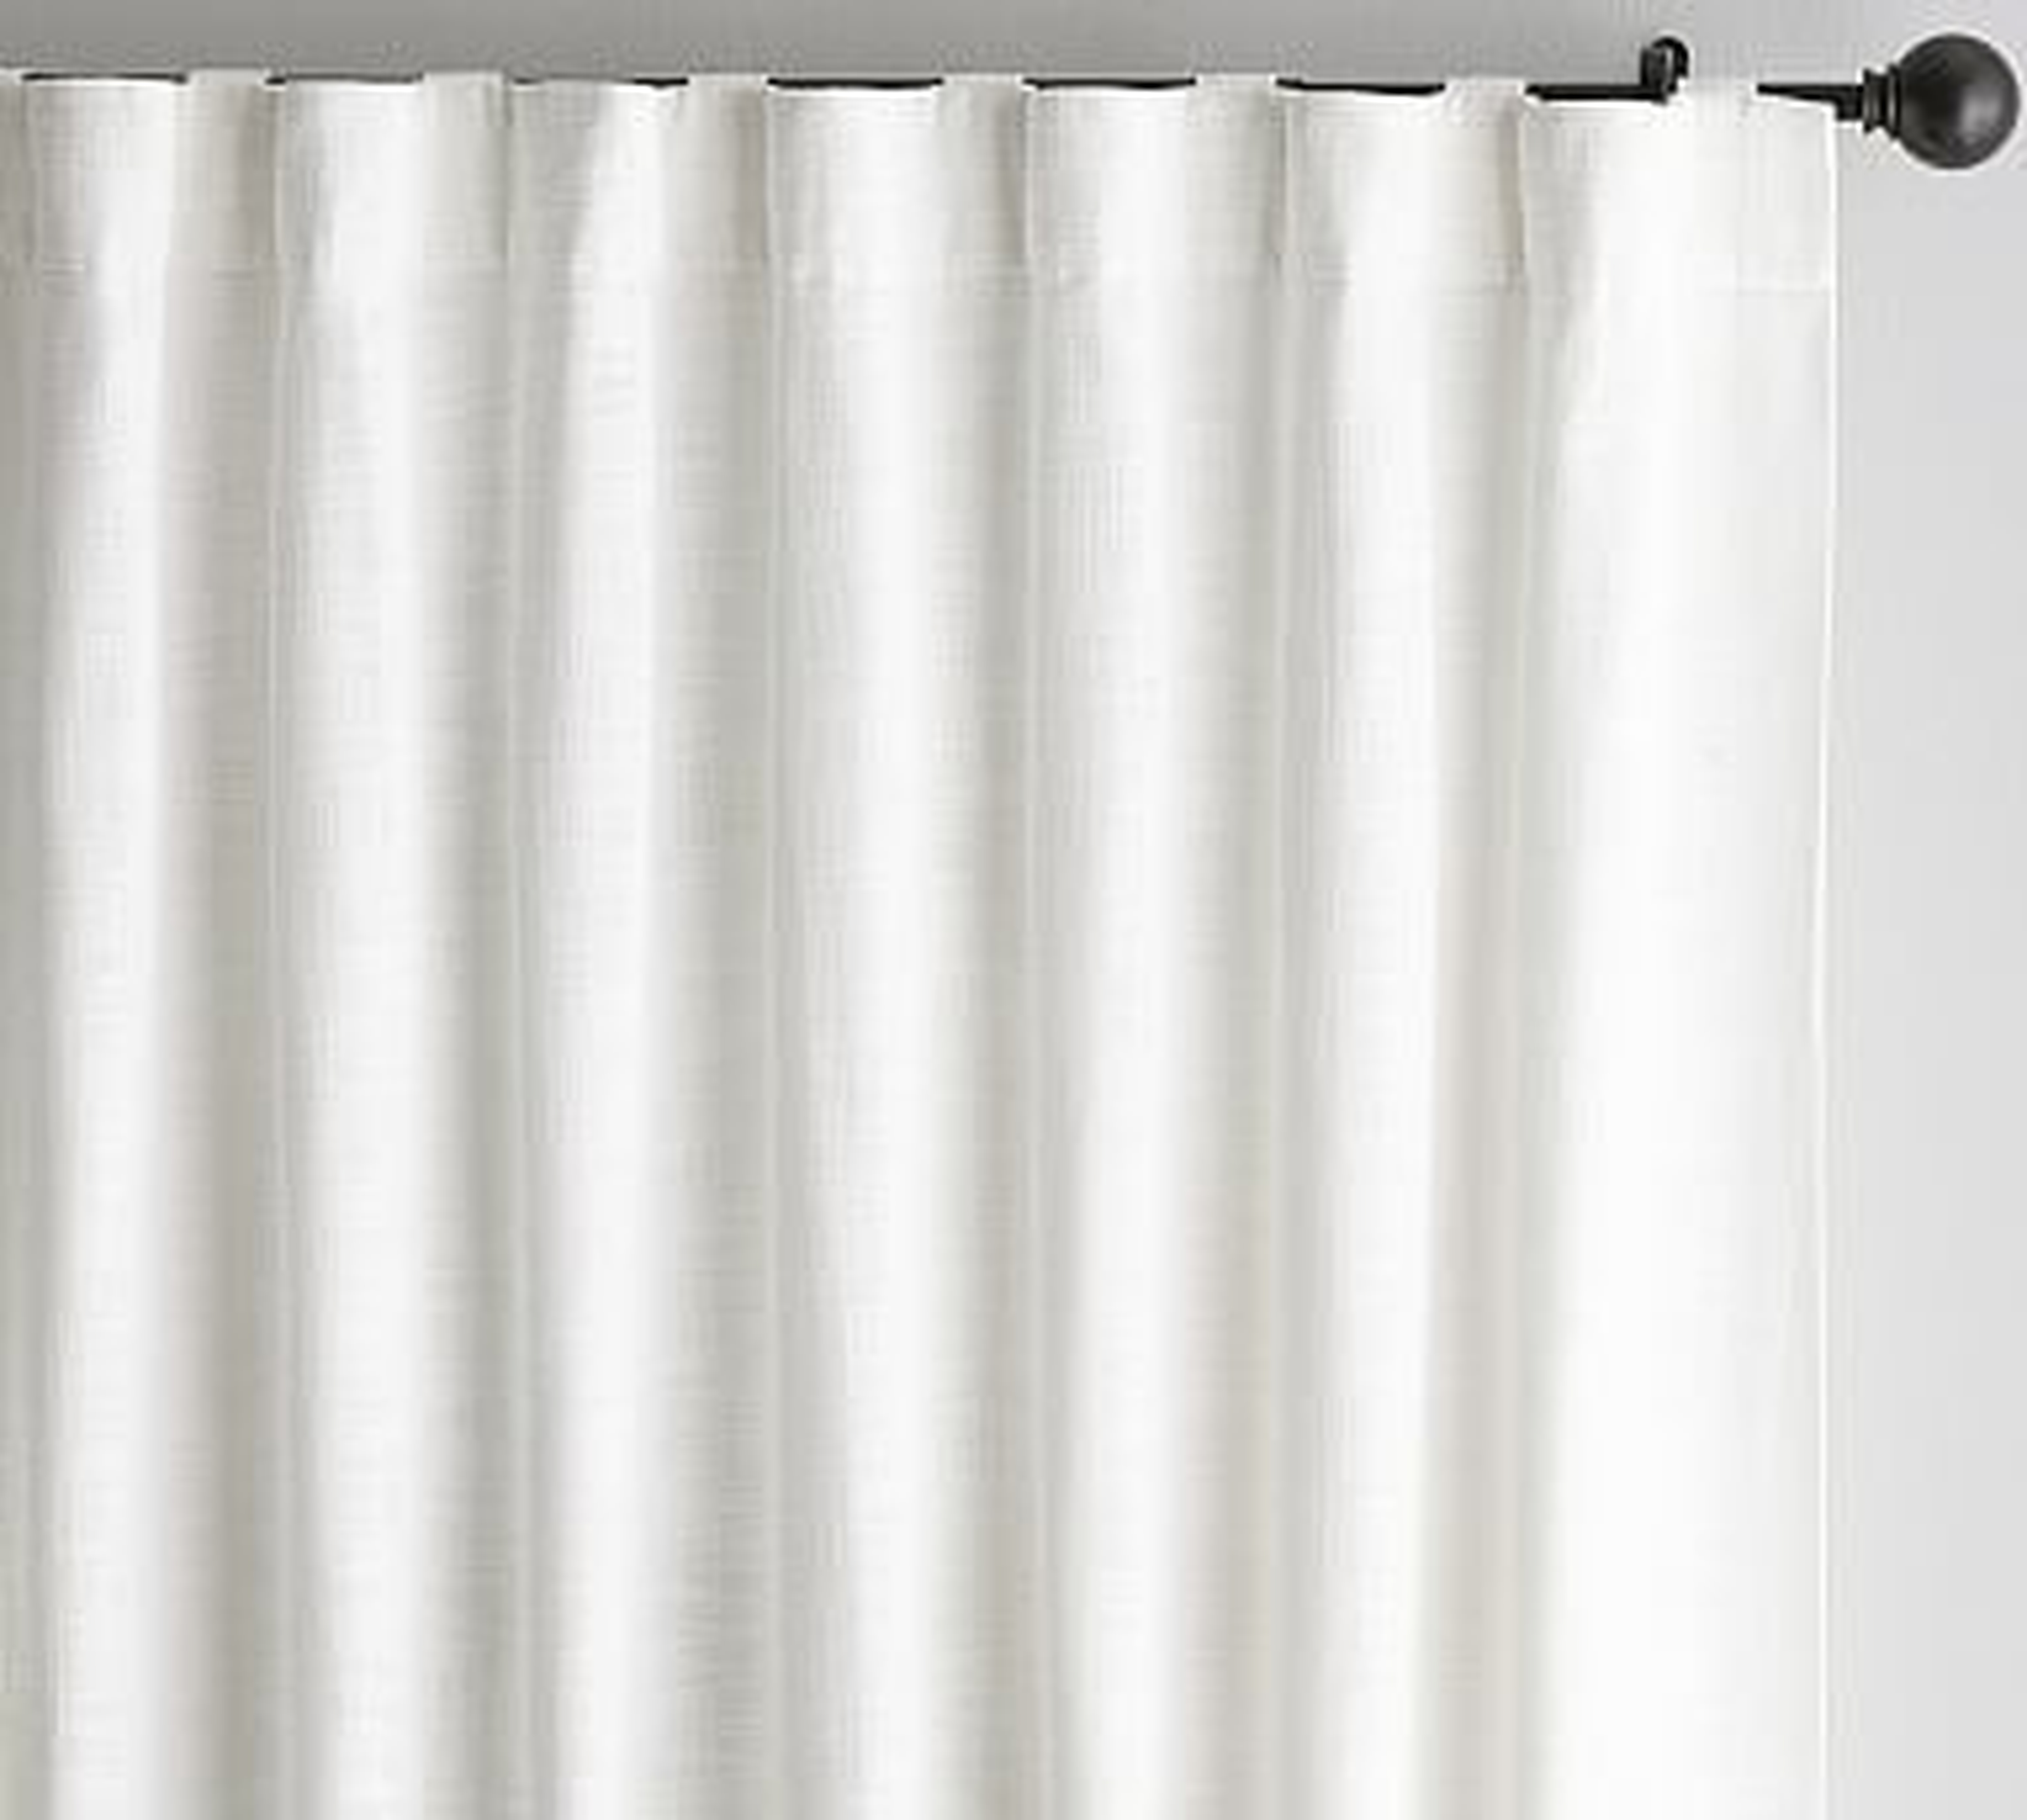 Seaton Textured Cotton Curtain, 50 x 108", White - Pottery Barn